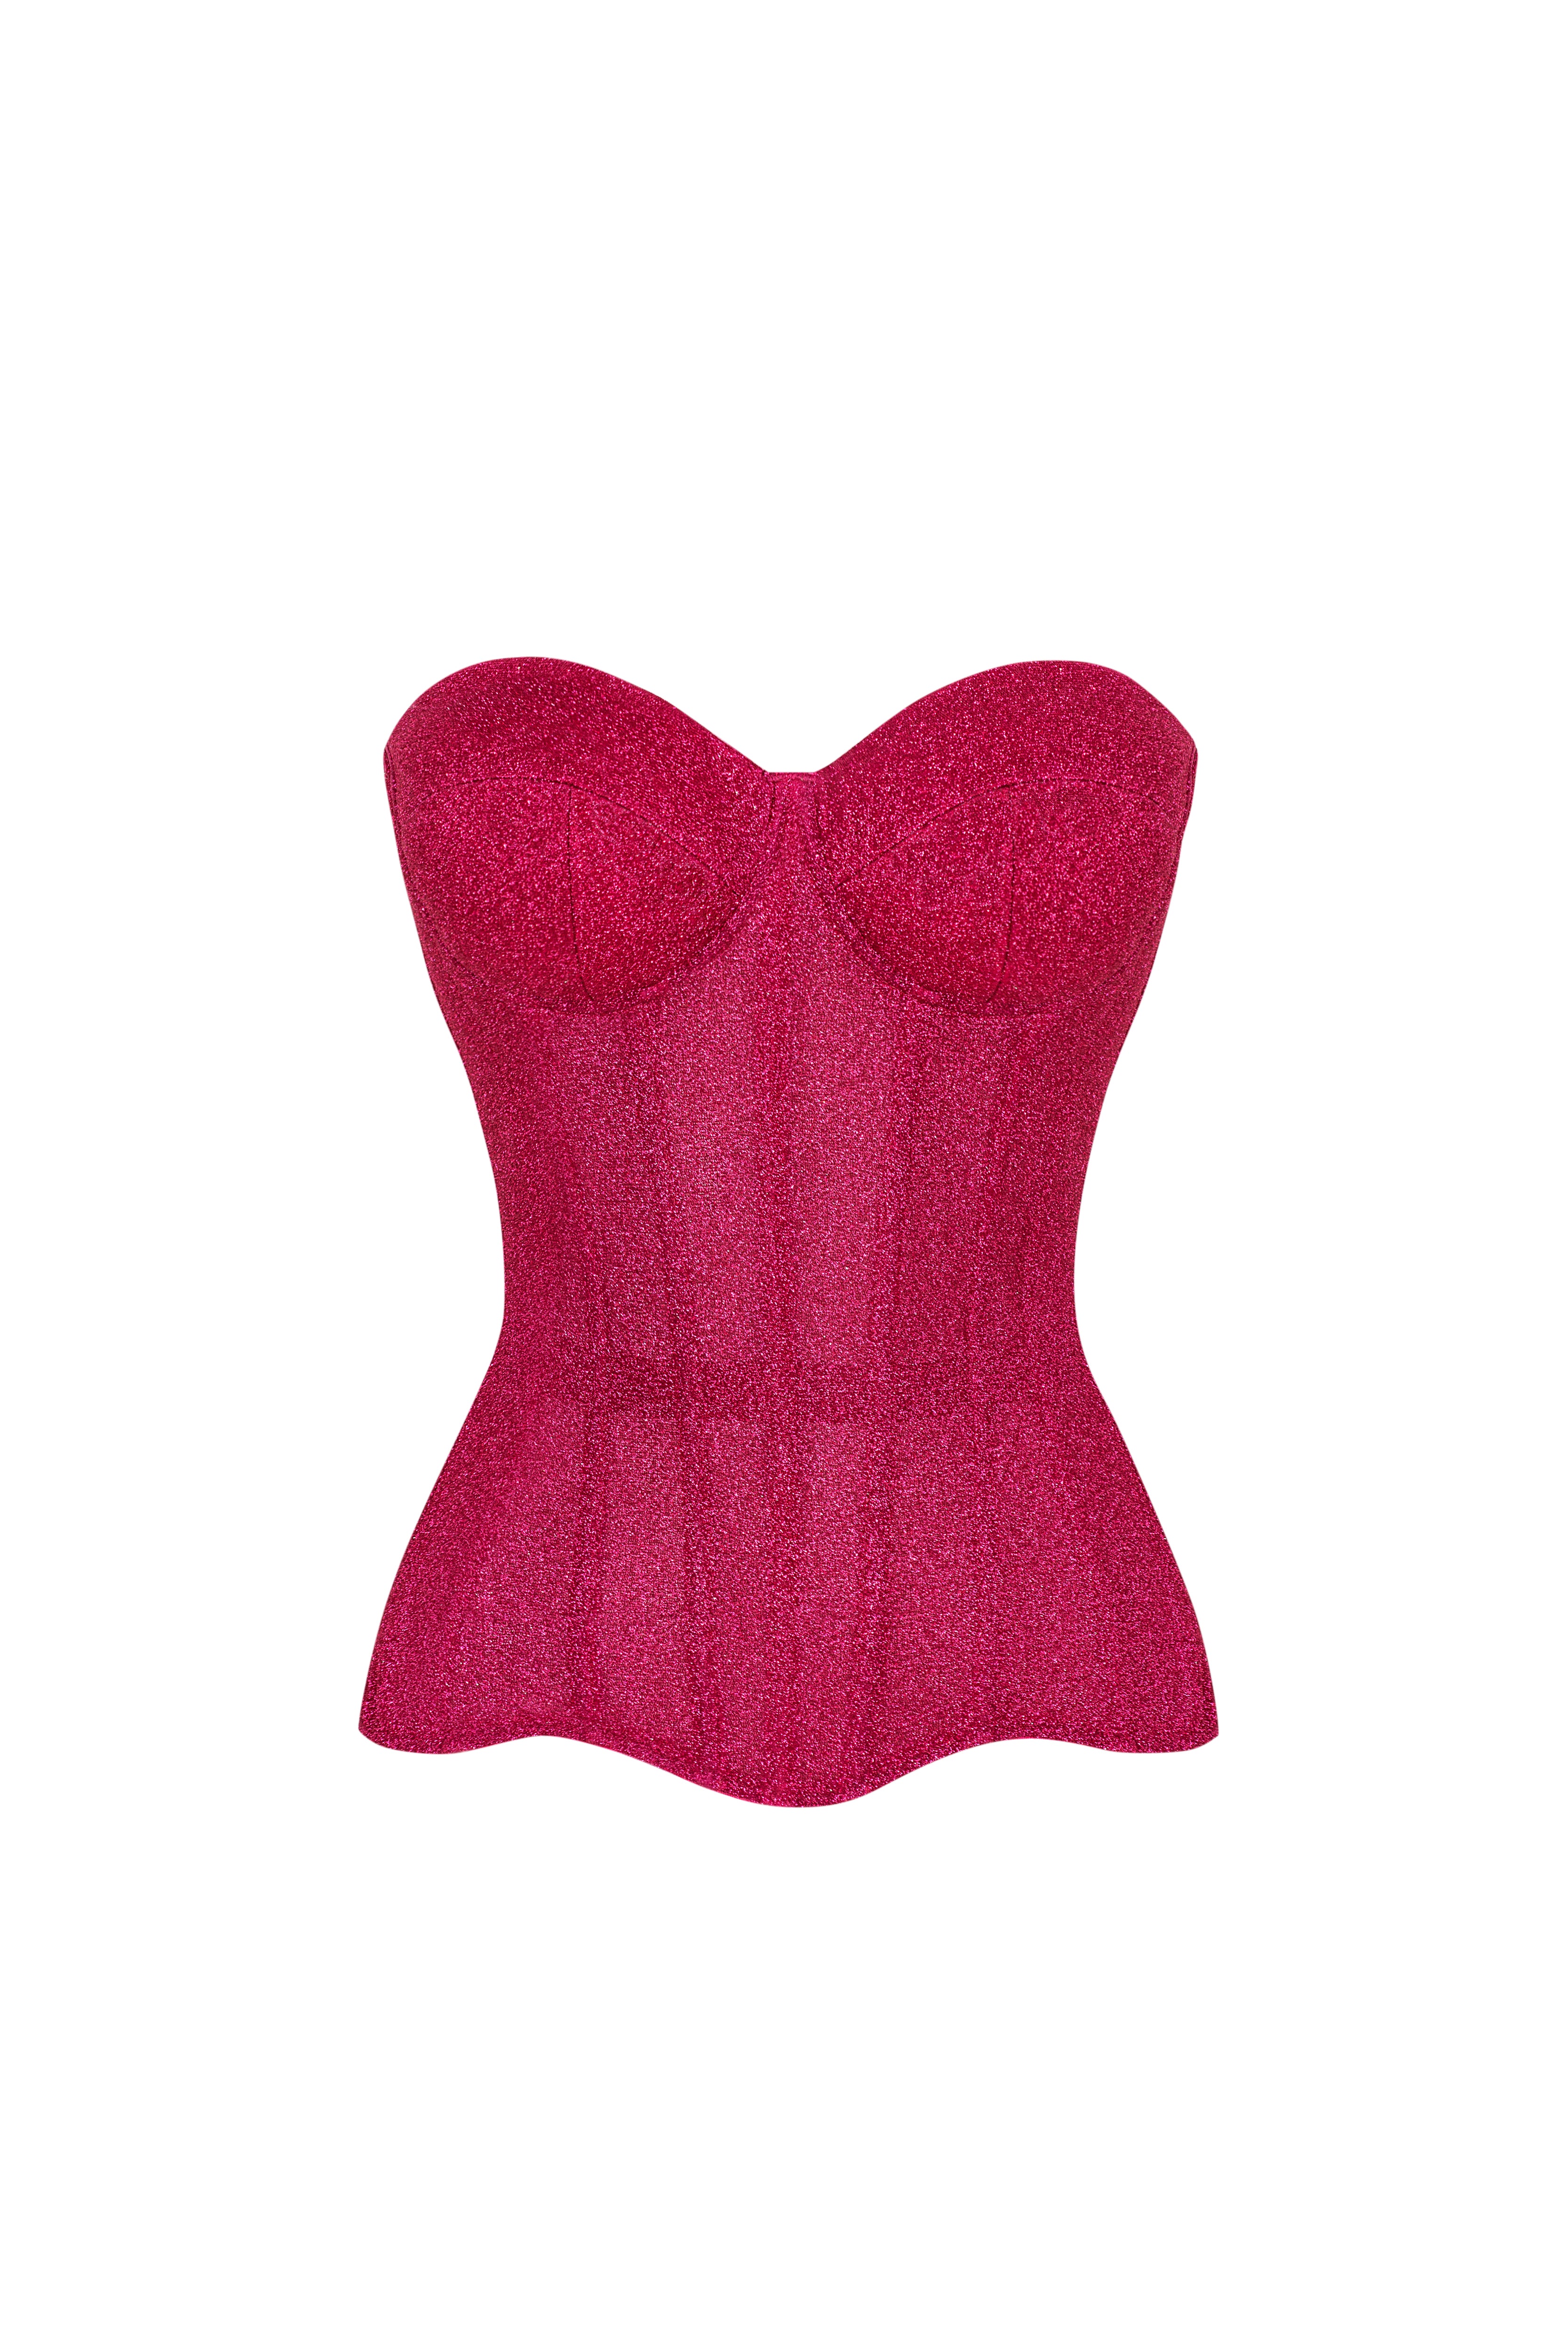 Brilliance drop Raspberry corset - STATNAIA